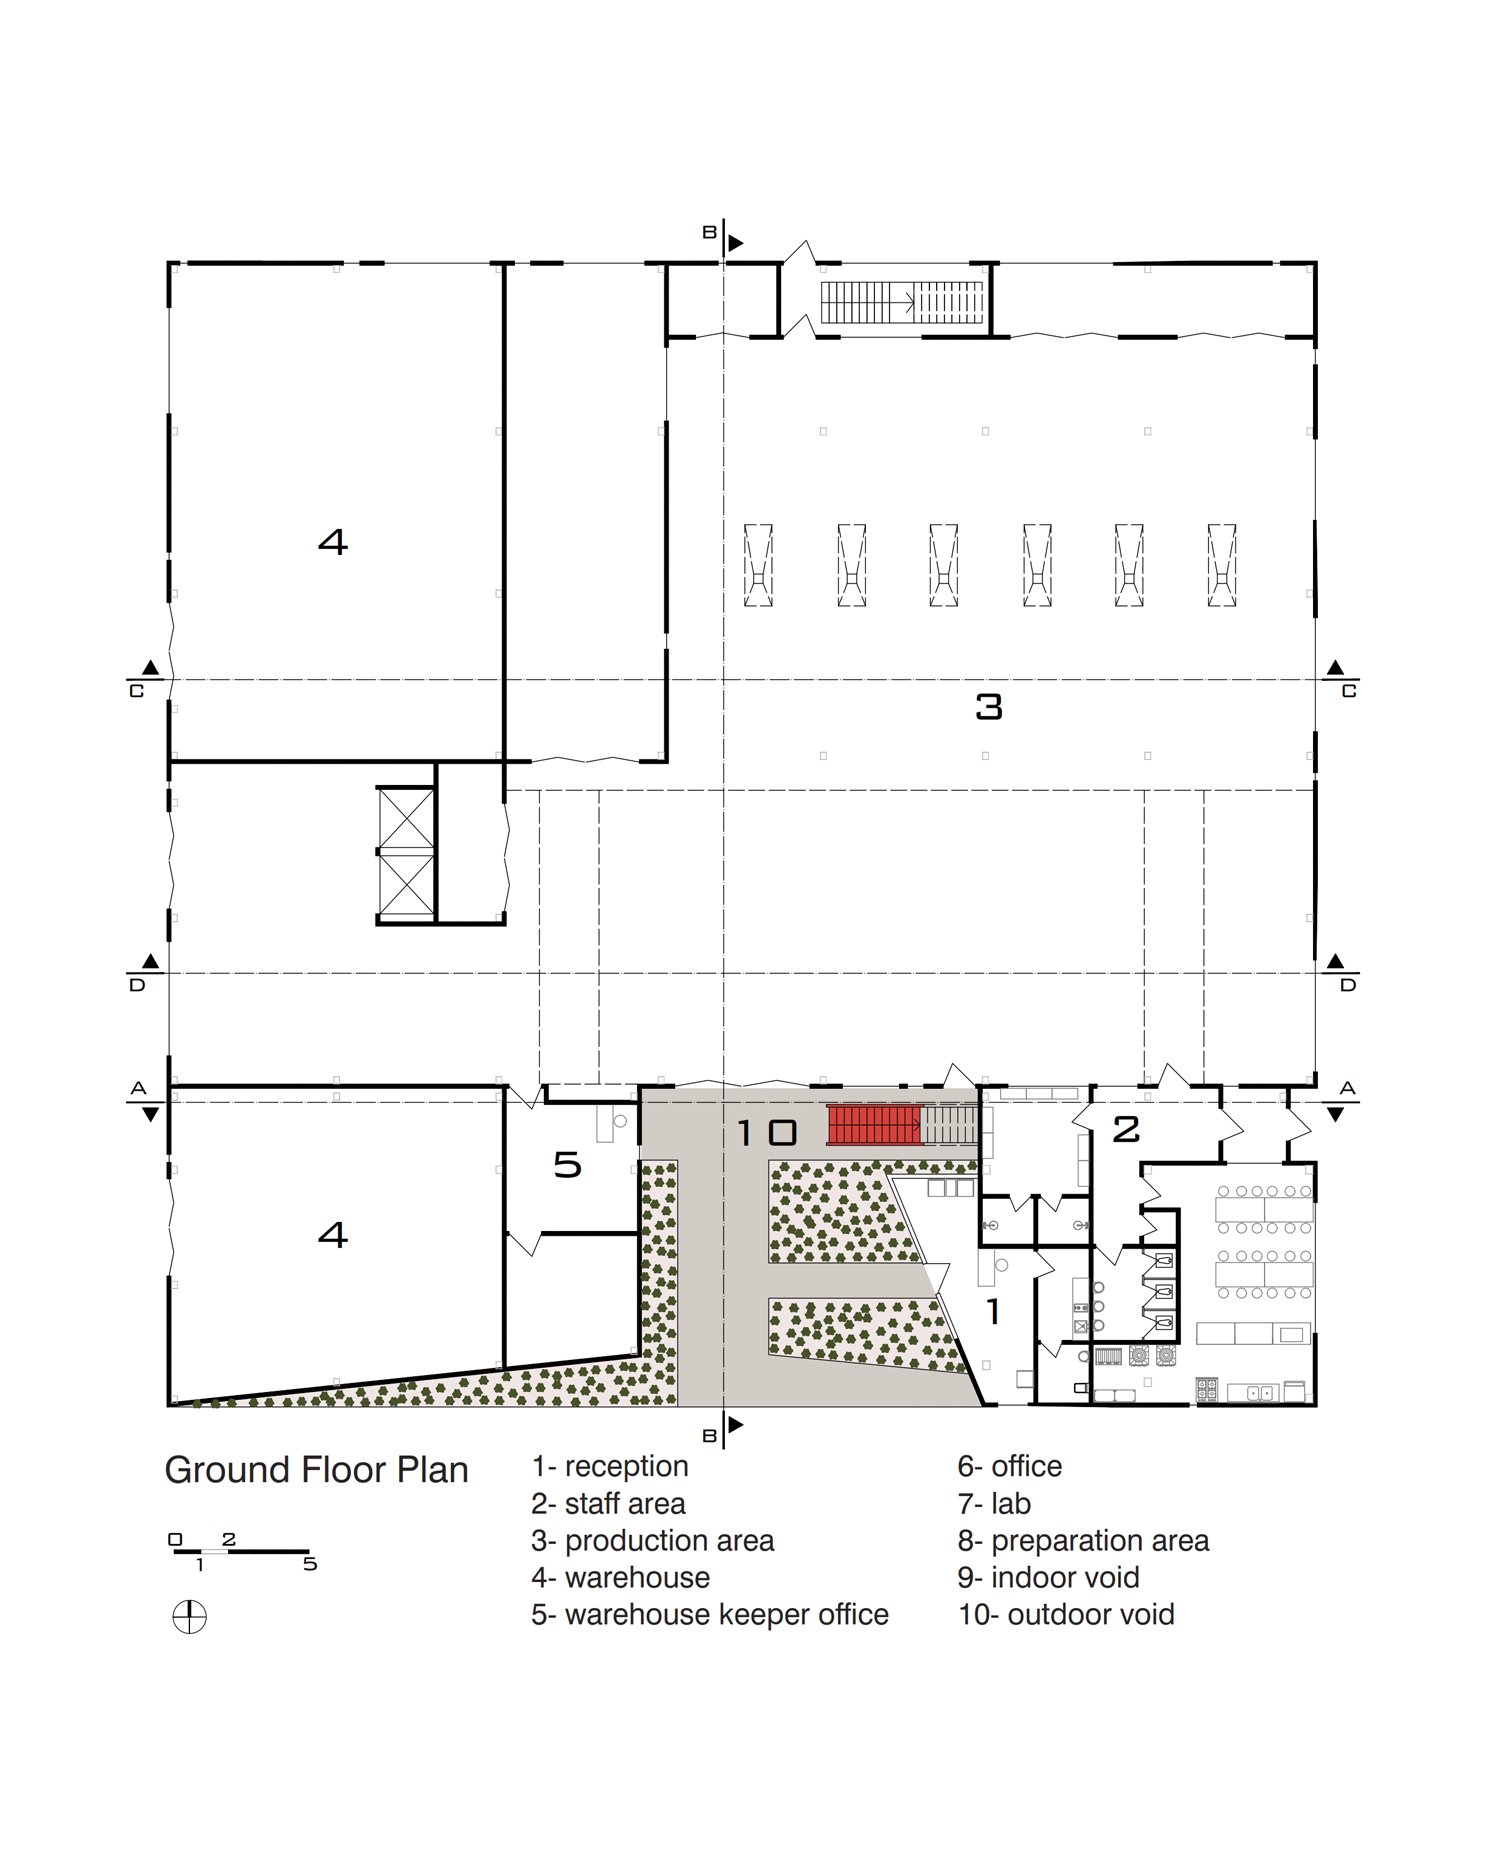 Ground Floor Plan | Overall Site Plan